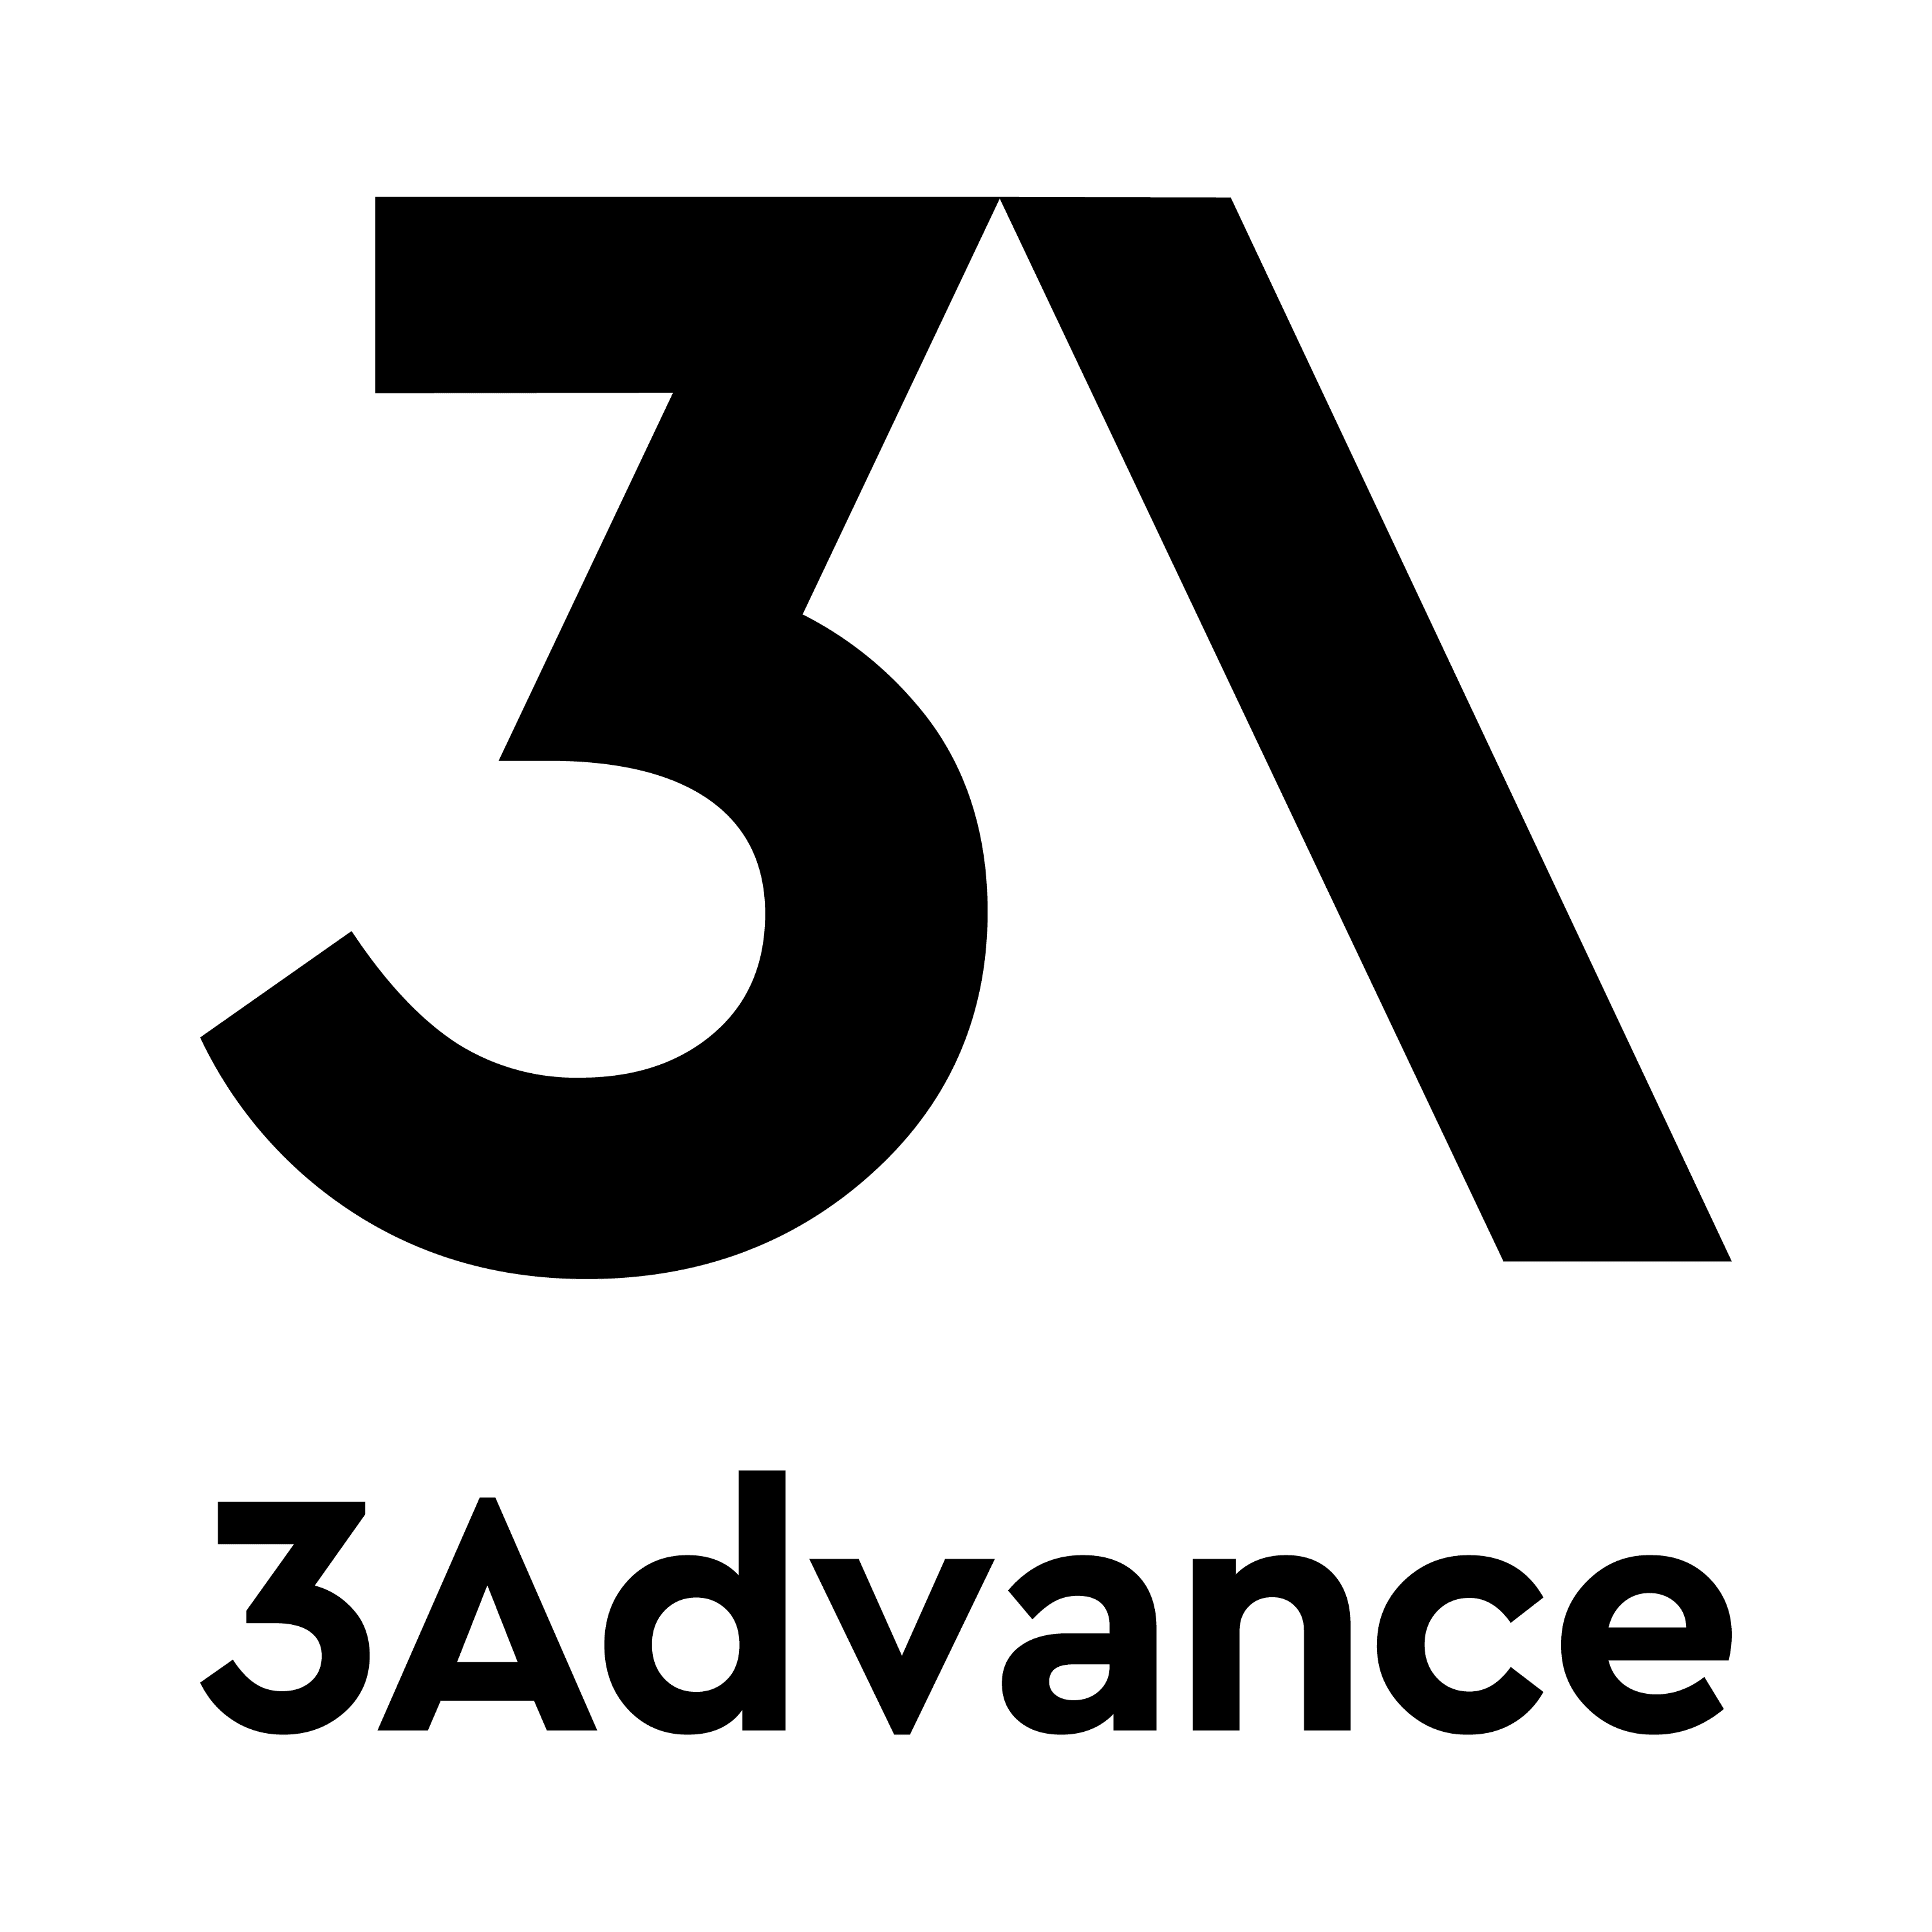 3Advance — Serverless Transformation